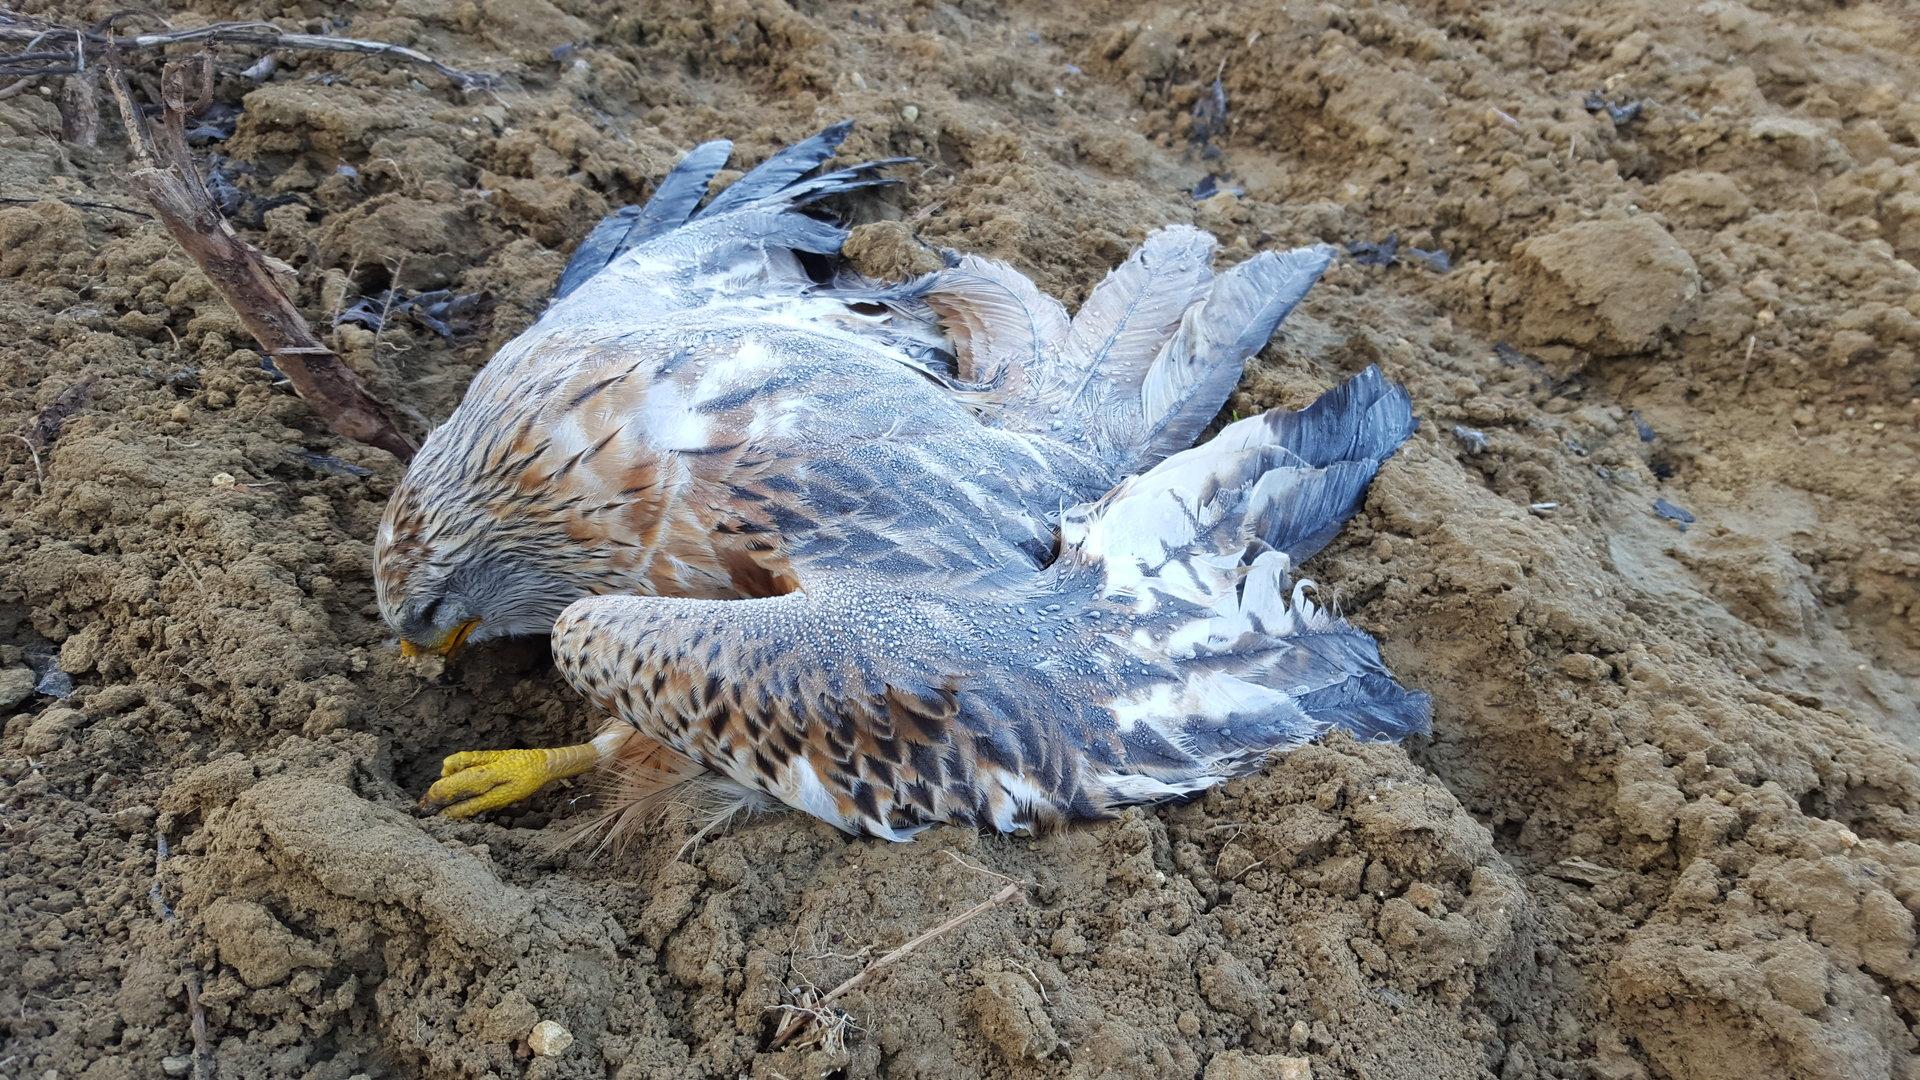 Greifvögel getötet: Illegales Nervengift gefunden